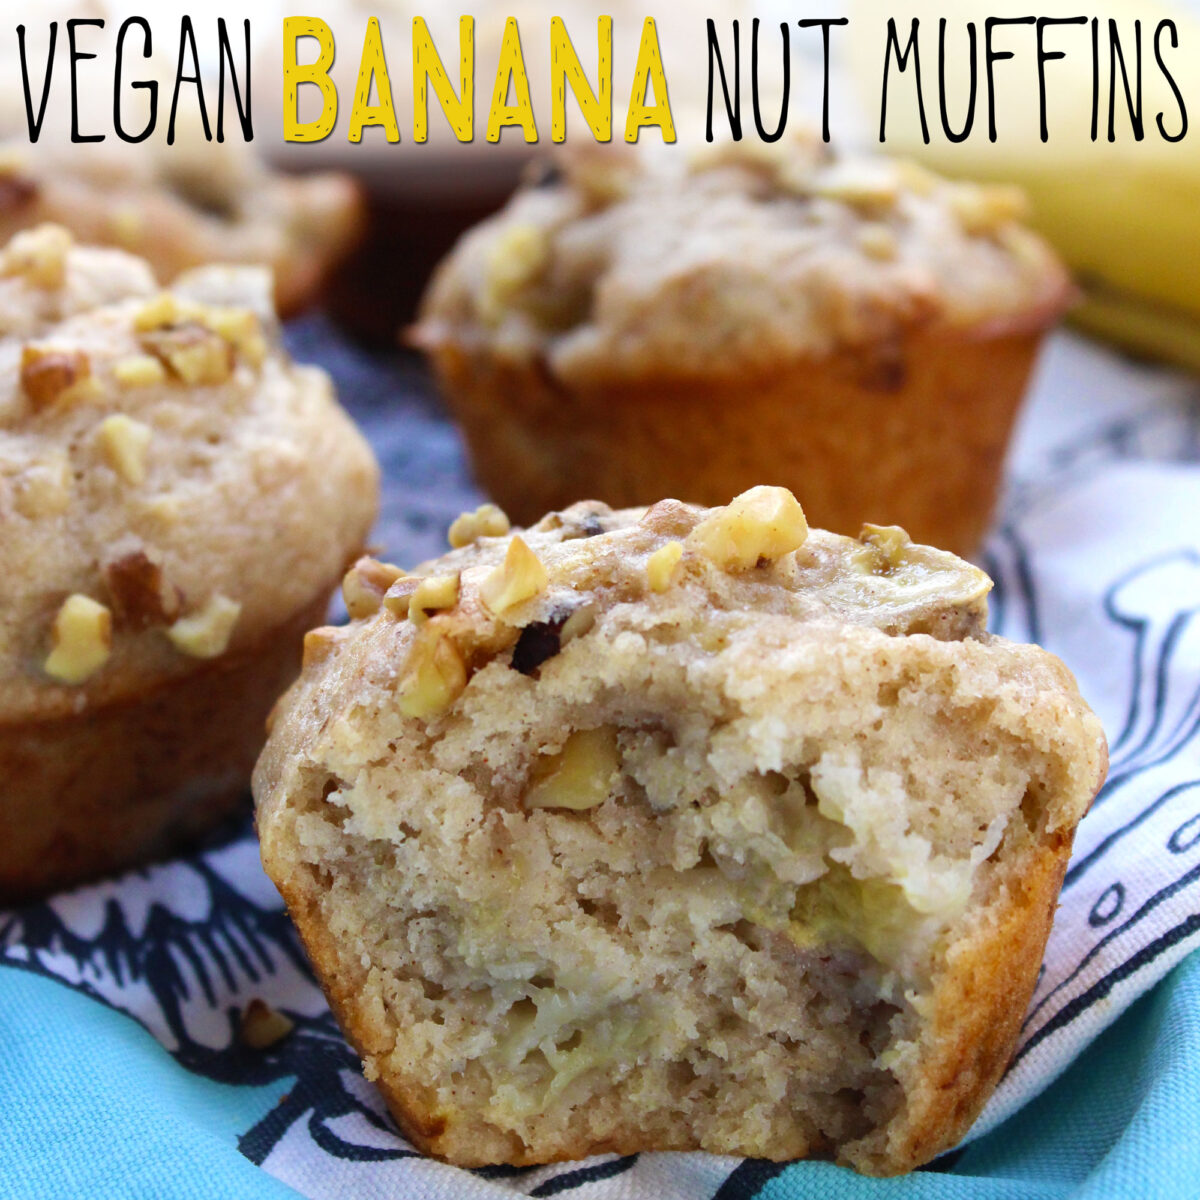 vegan muffin recipe - banana nut